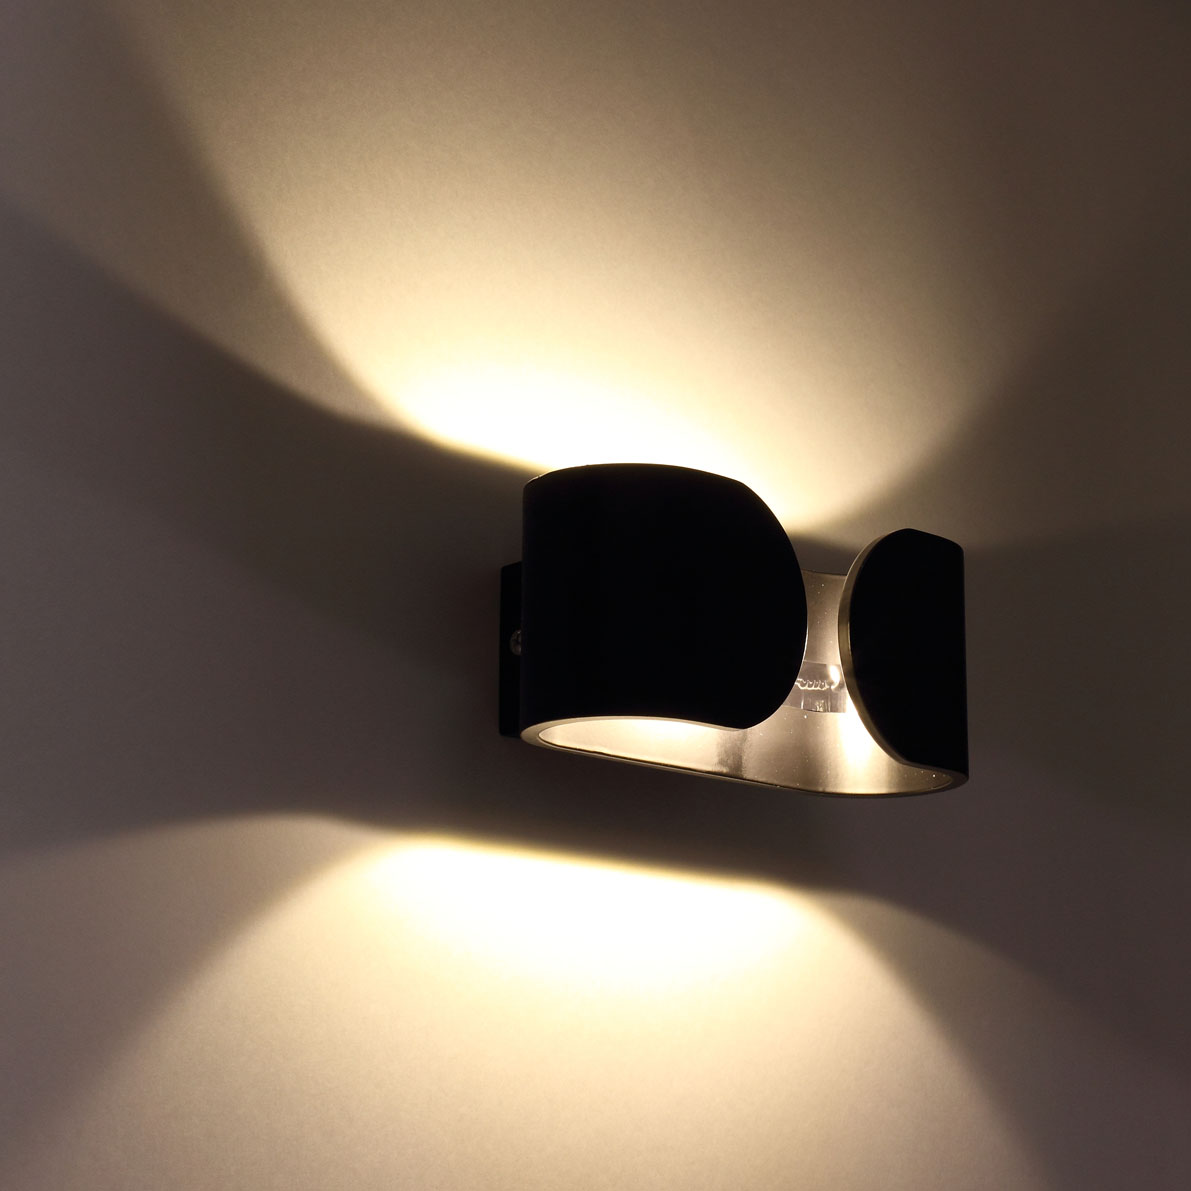 Светодиодные светильники Светодиодный светильник JH-BD04 DHL14 (220V, 6W, черный корпус, warm white)